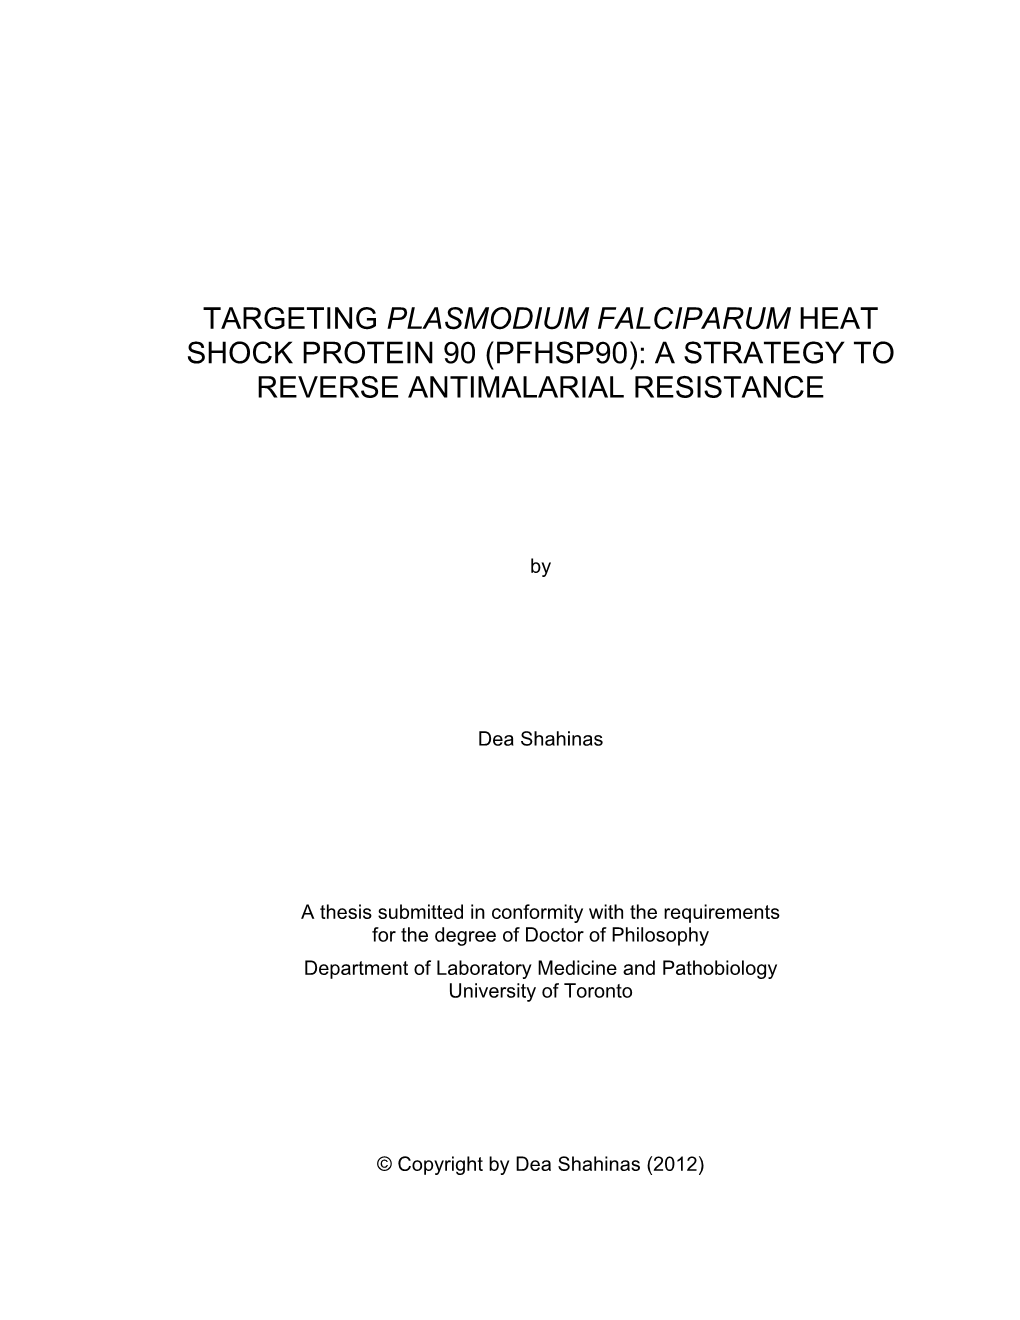 Targeting Plasmodium Falciparum Heat Shock Protein 90 (Pfhsp90): a Strategy to Reverse Antimalarial Resistance